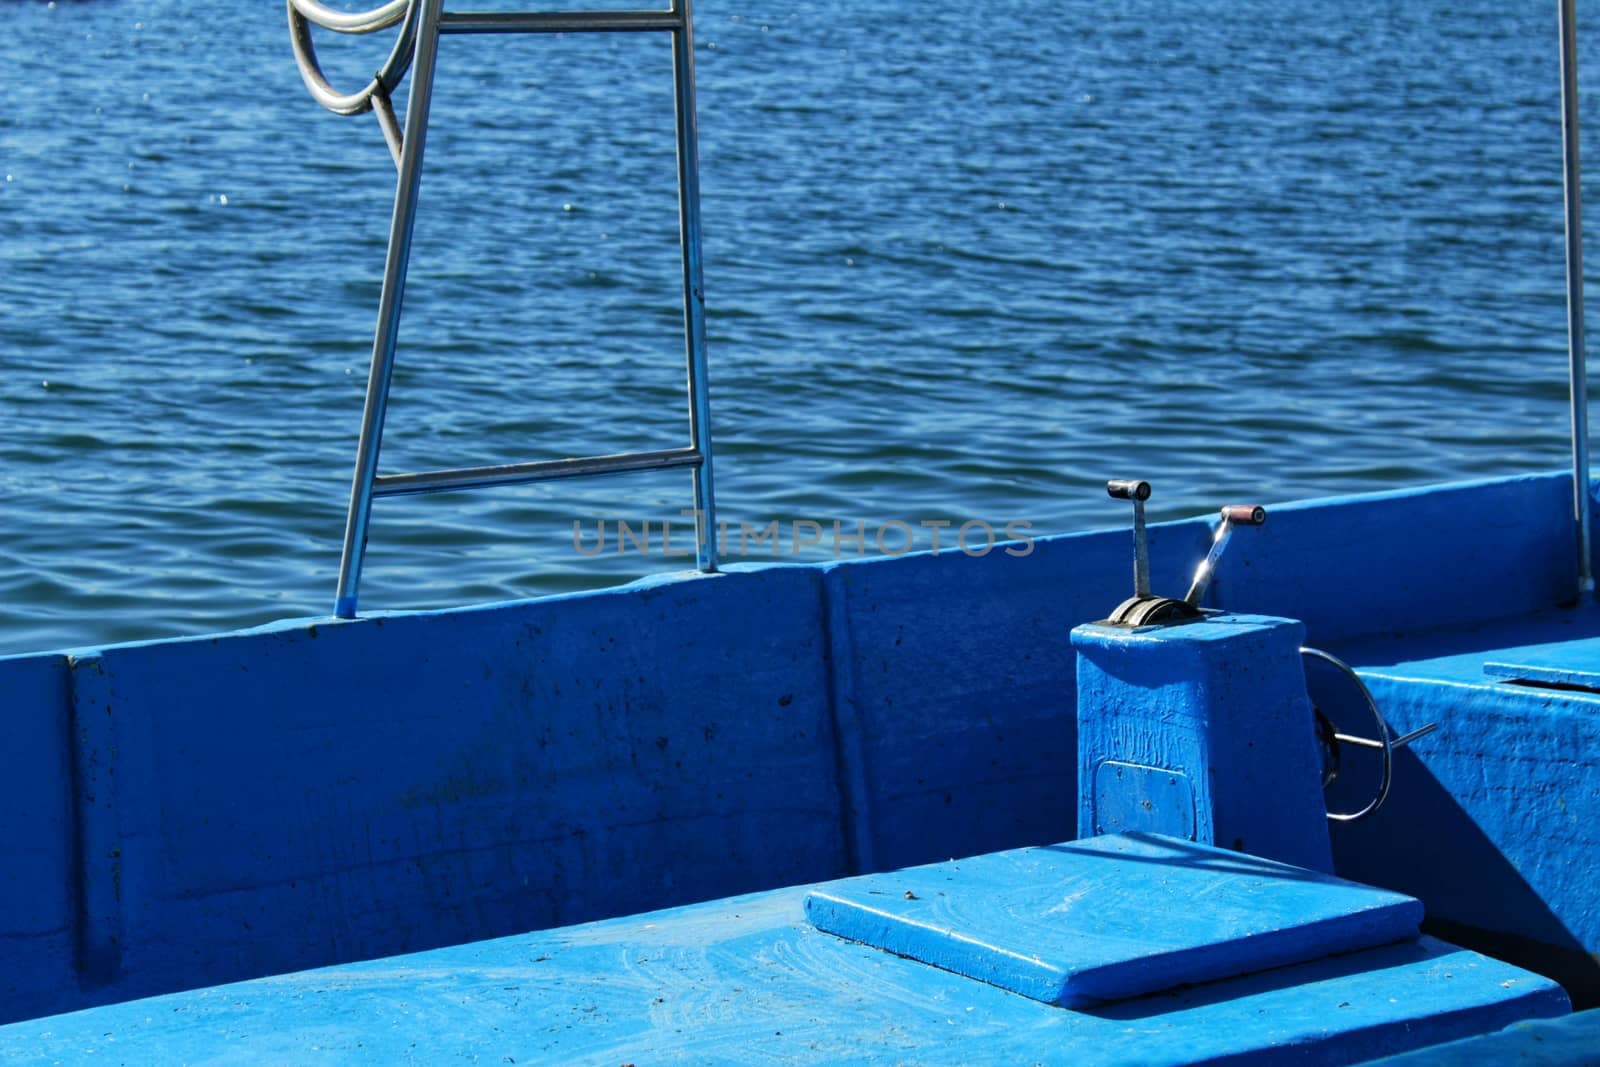 Blue boat on the dock of Santa Pola, Spain by soniabonet